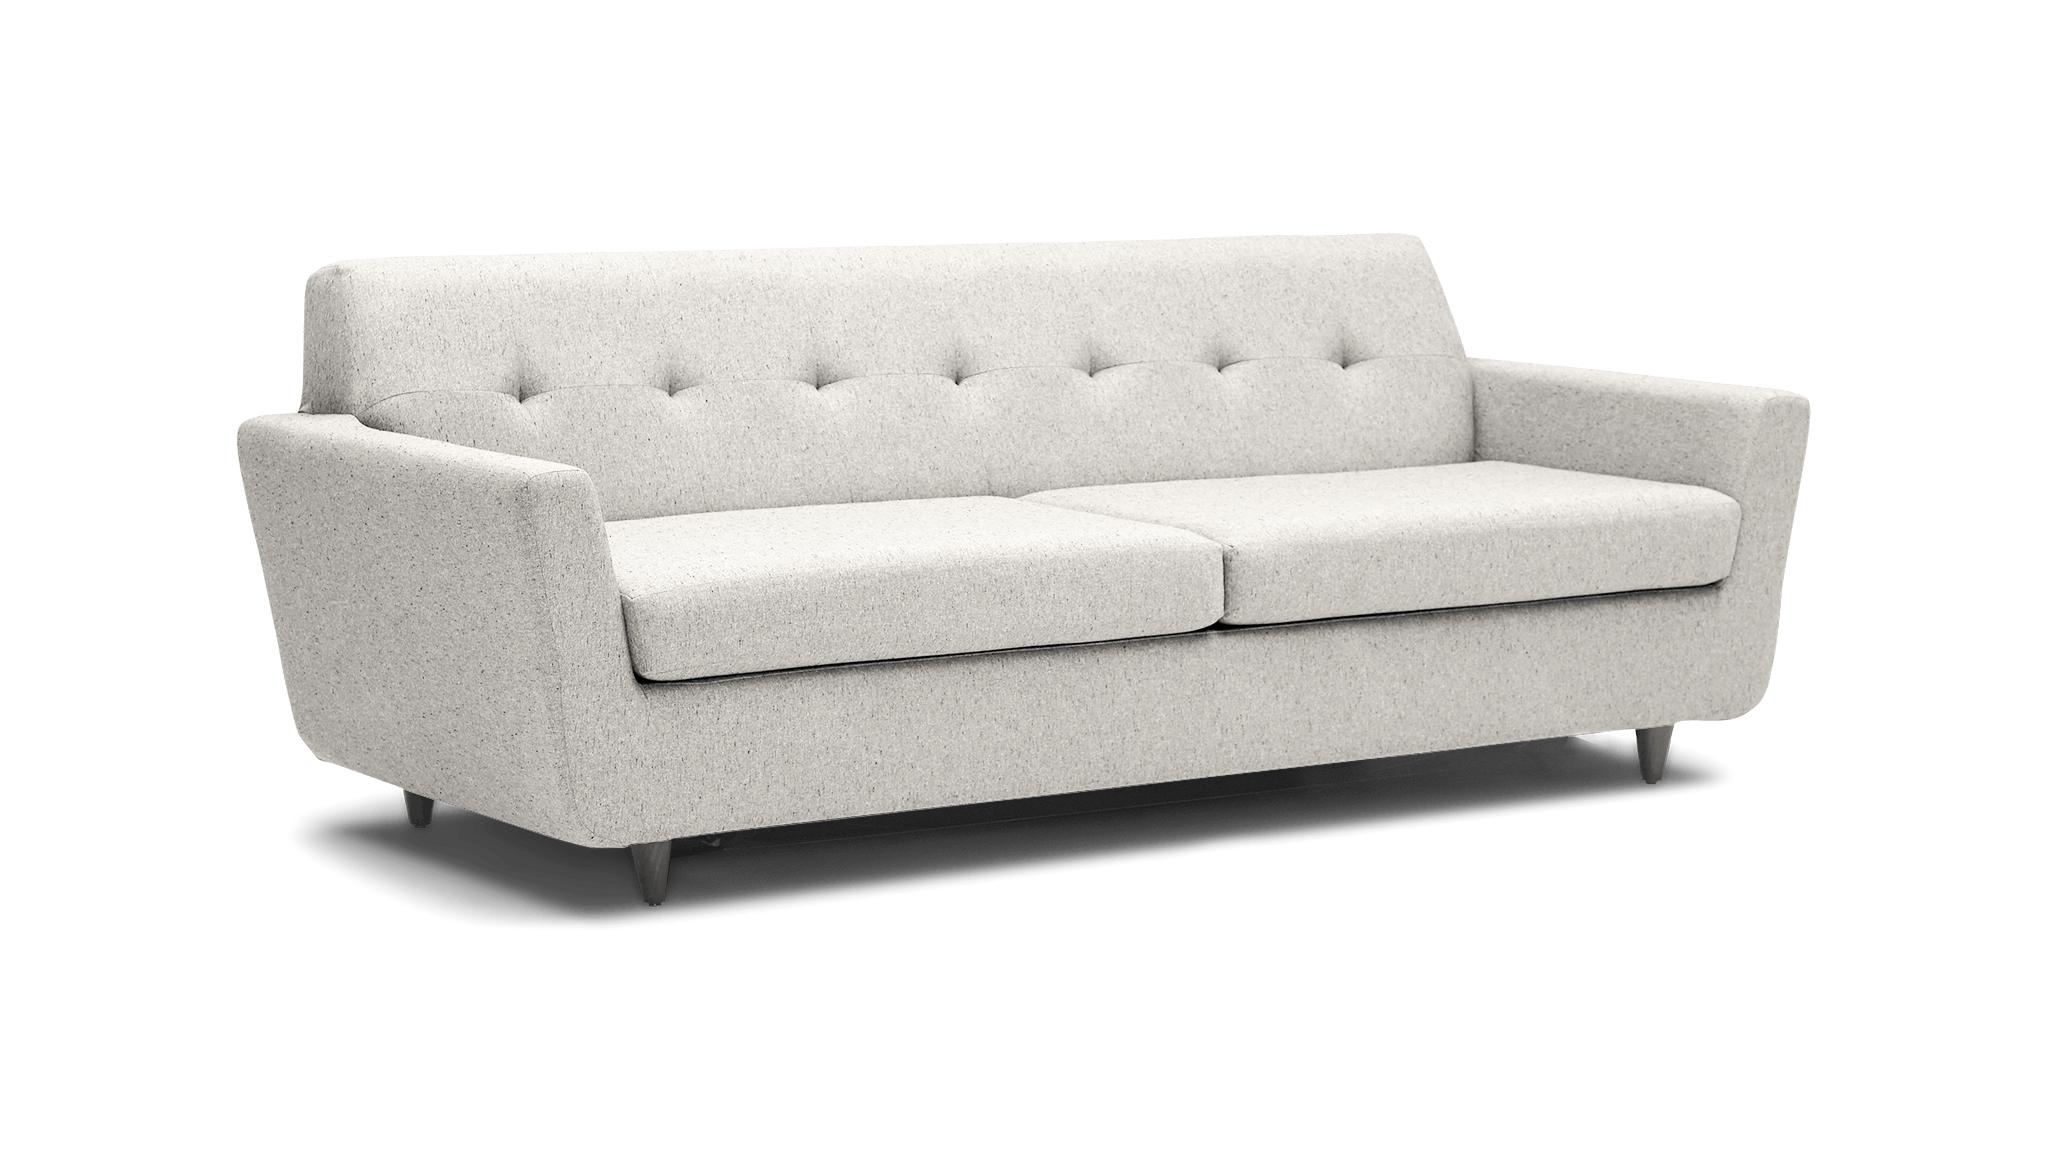 White Hughes Mid Century Modern Sleeper Sofa - Tussah Snow - Mocha - Image 1